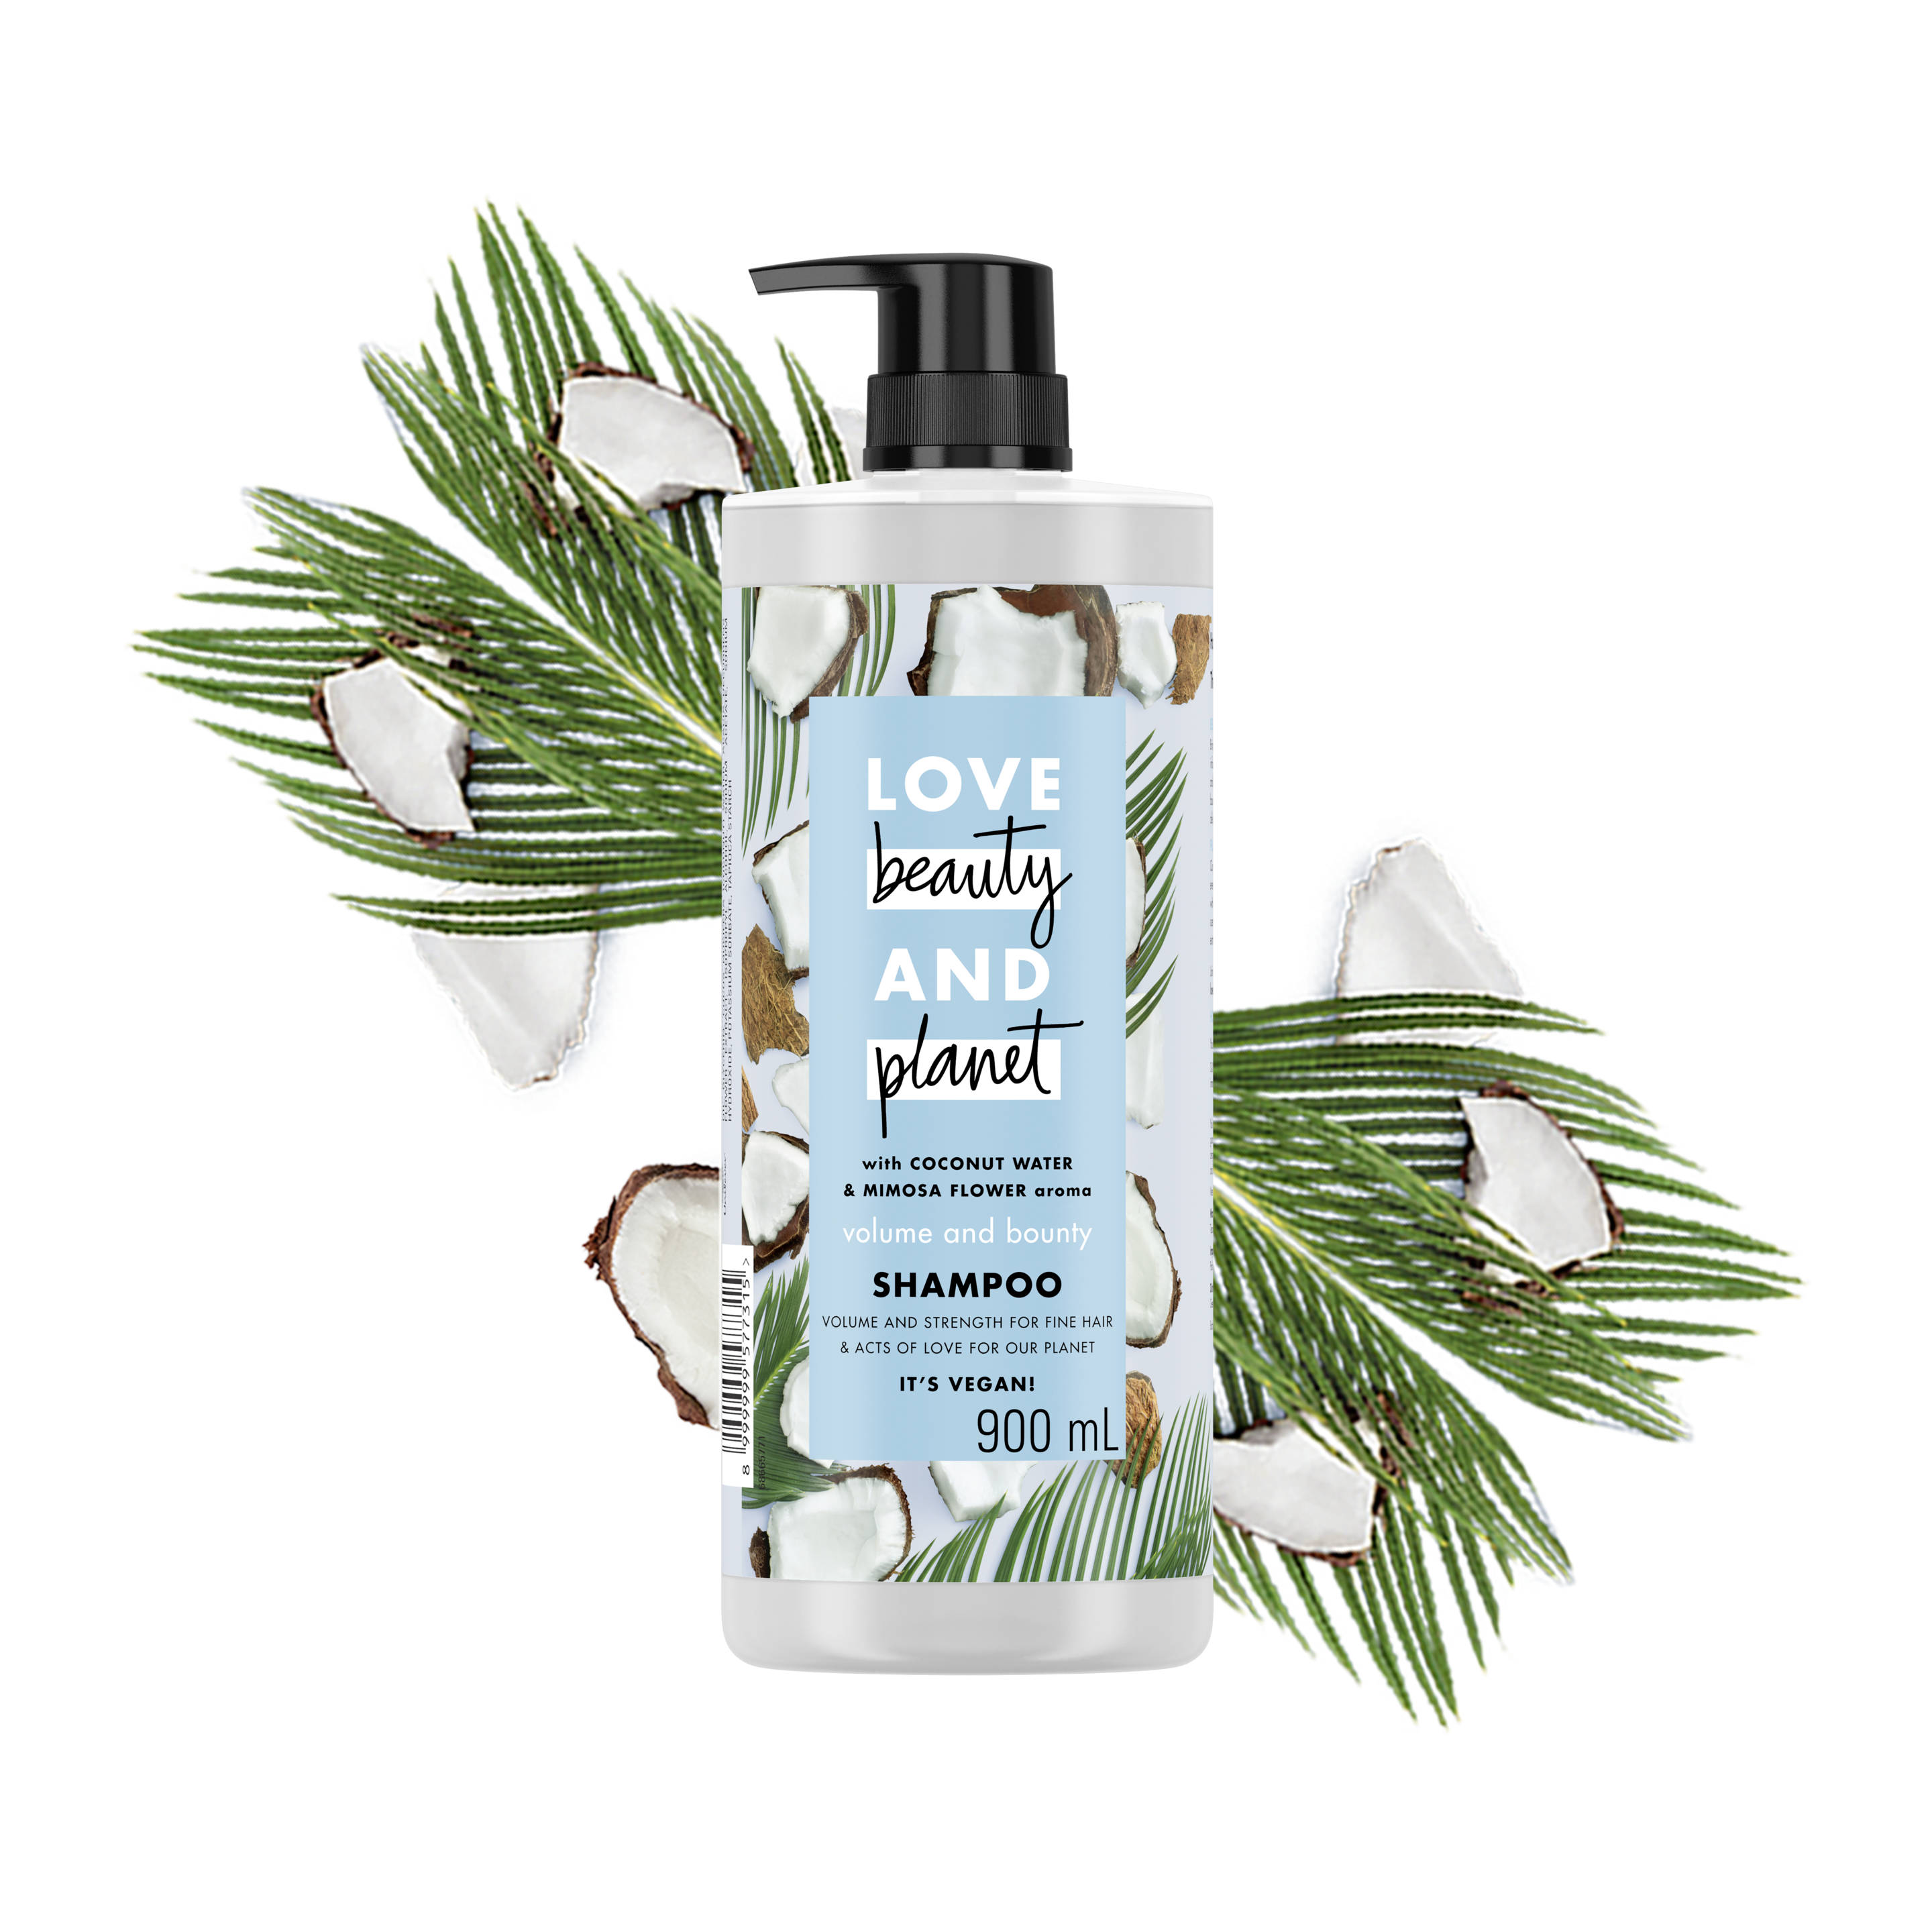 Tampak depan kemasan Love Beauty and Planet Coconut Water & Mimosa Flower Shampoo ukuran 900 ml